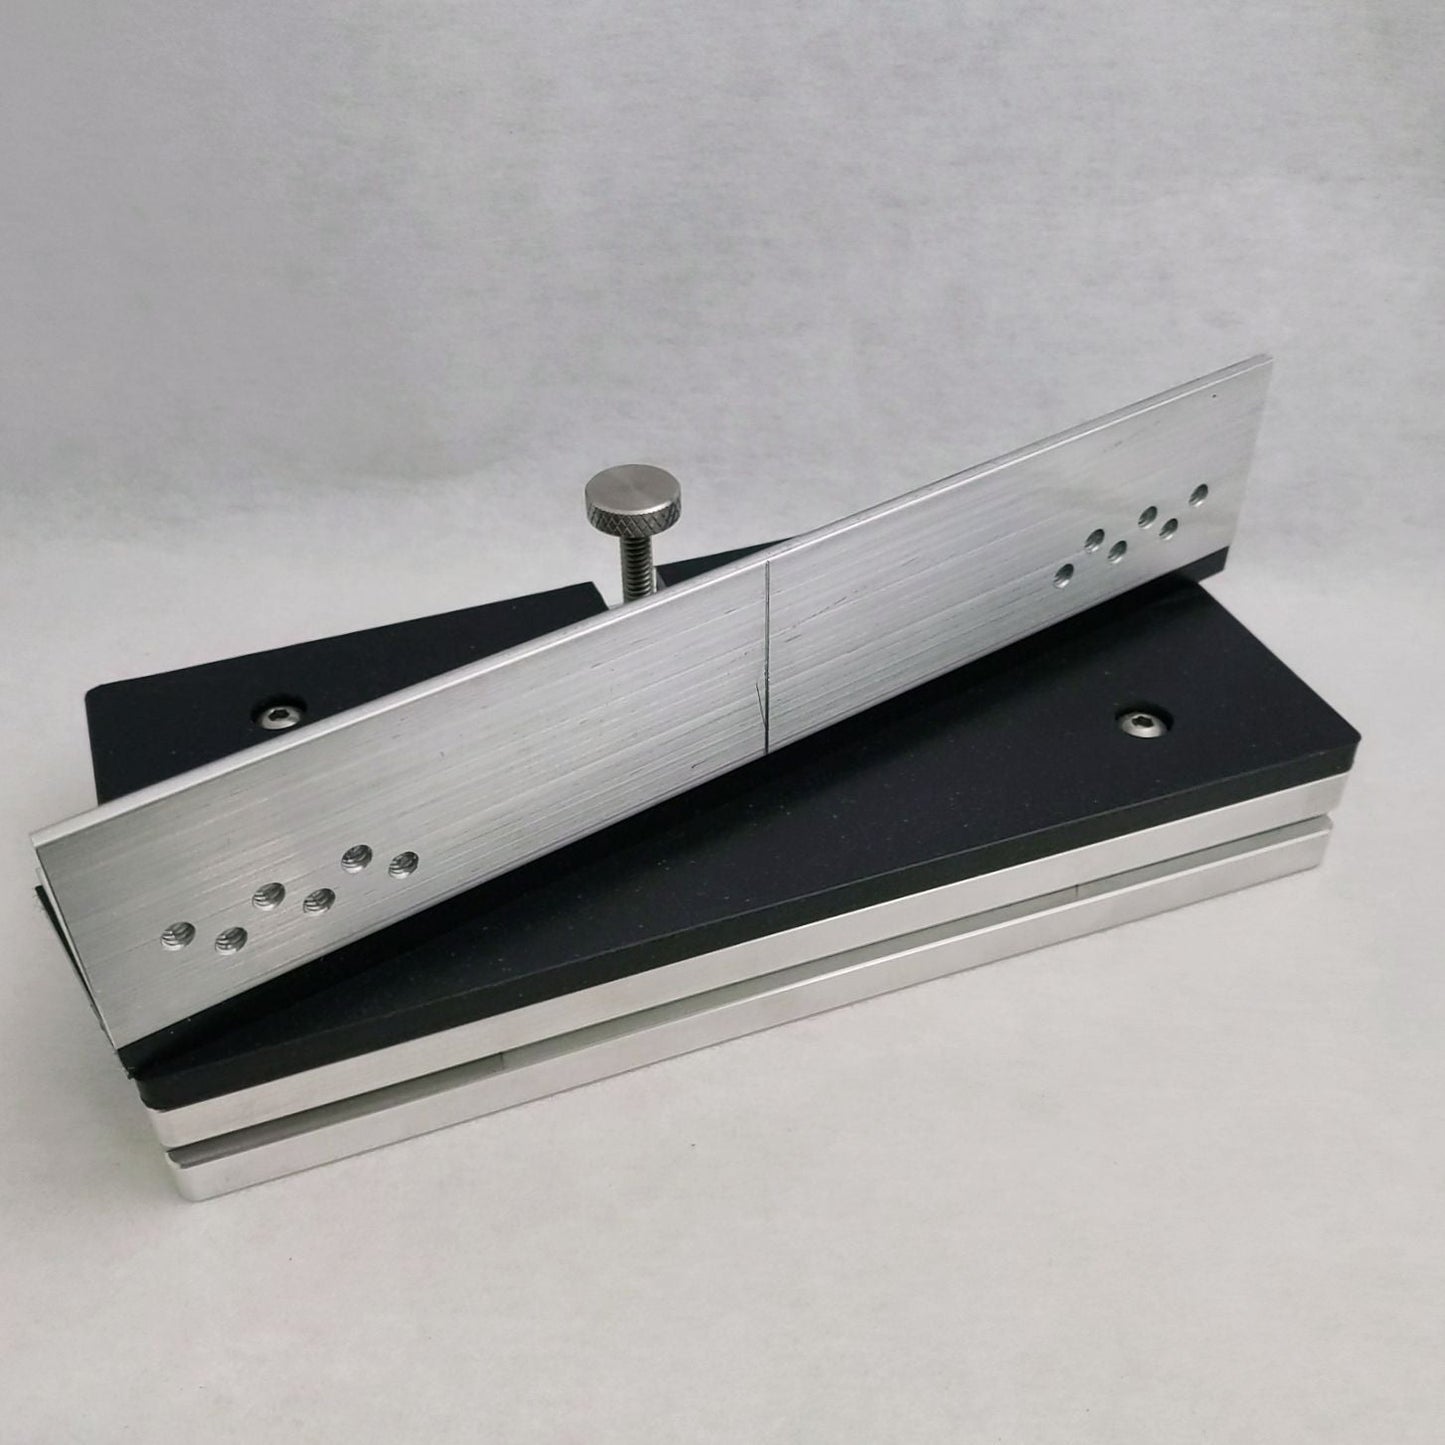 Micro Adjust - Knife Making Kit (8")